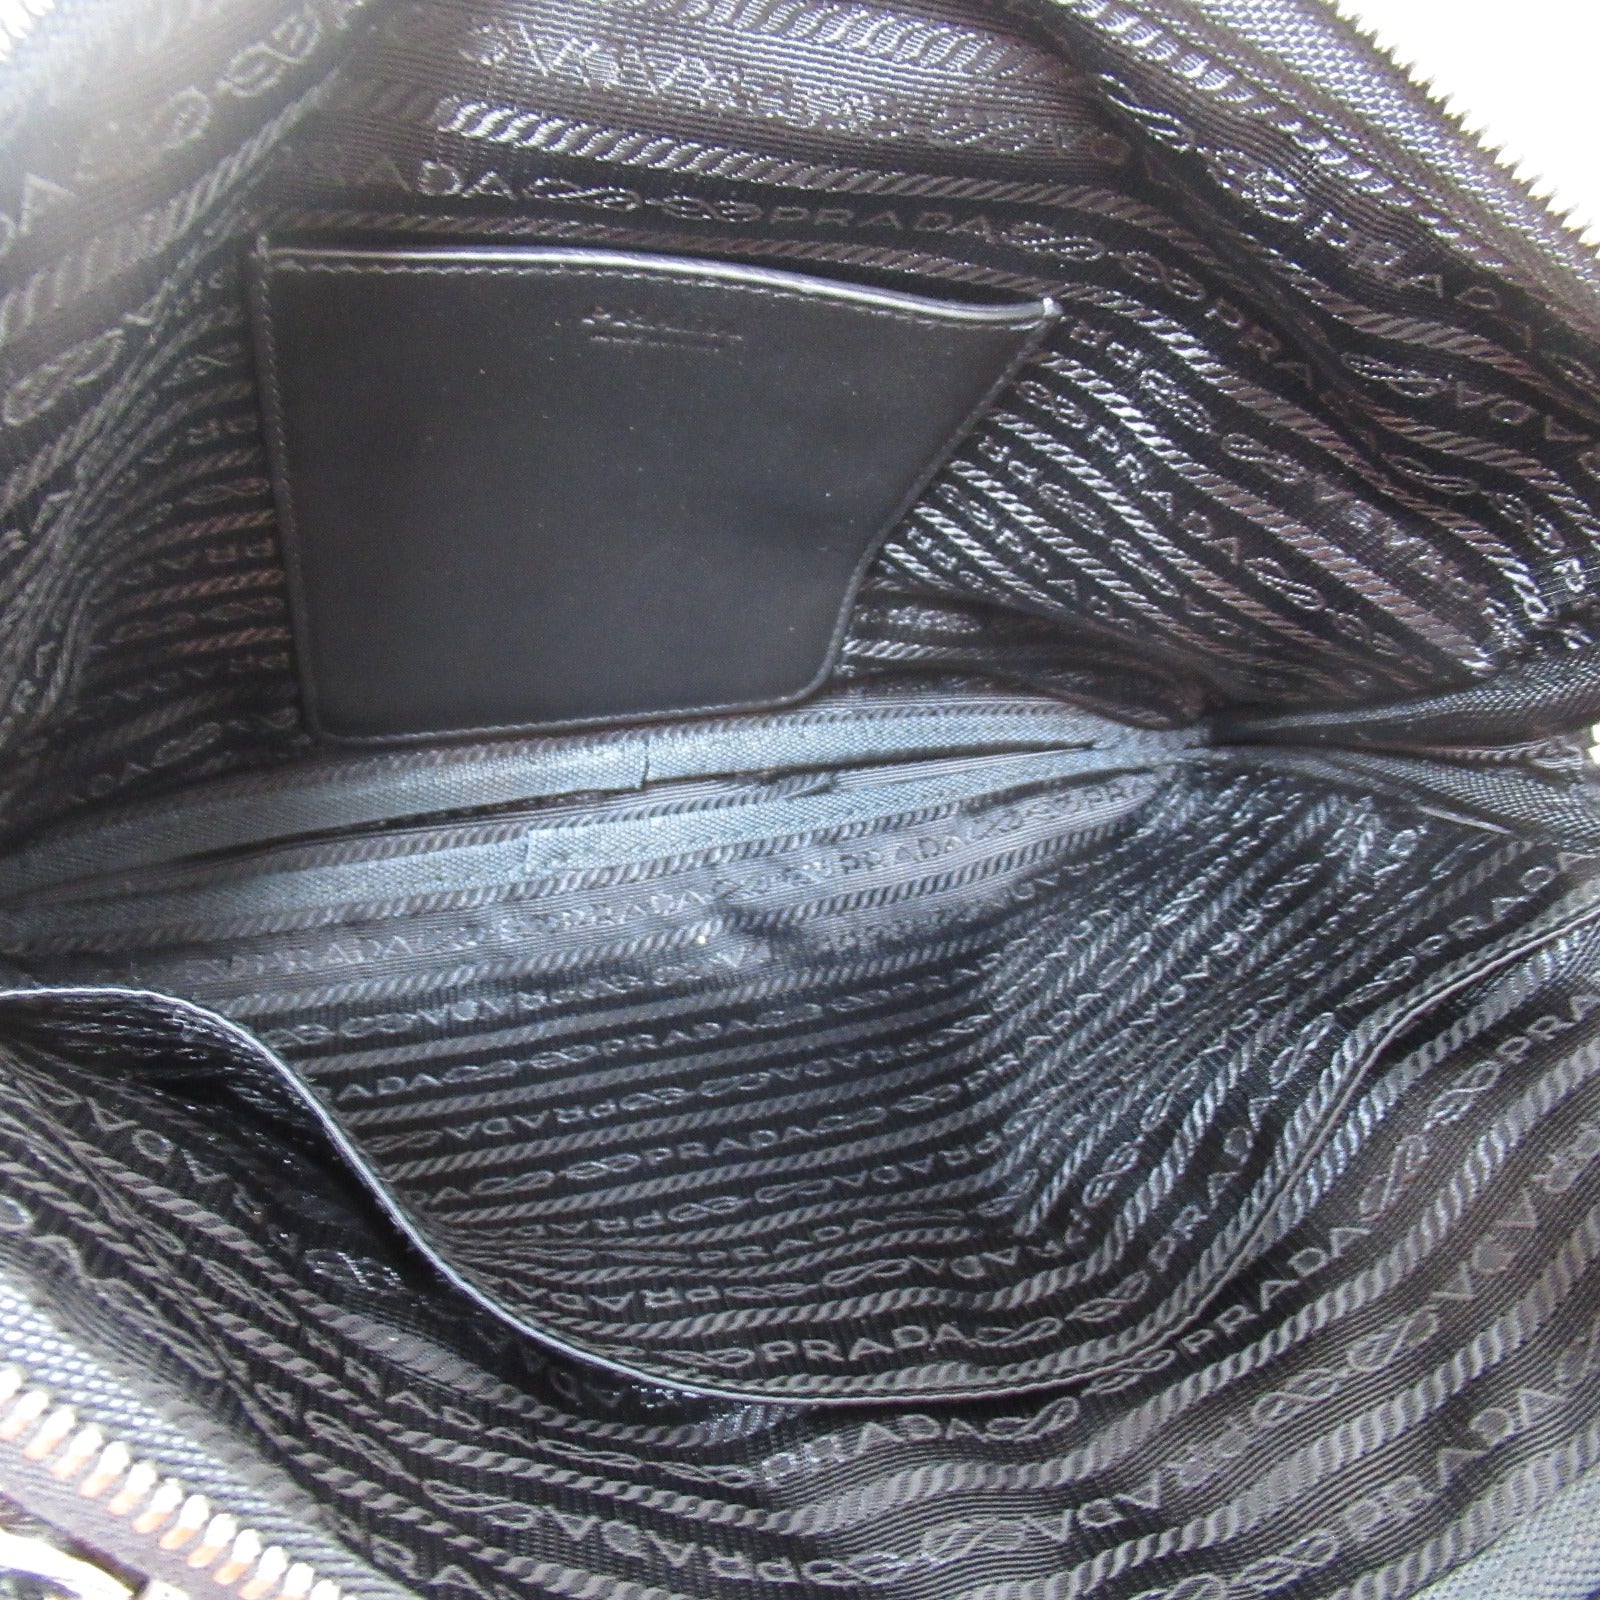 Prada Prada Shoulder Bag Nylon   Black 2VH116